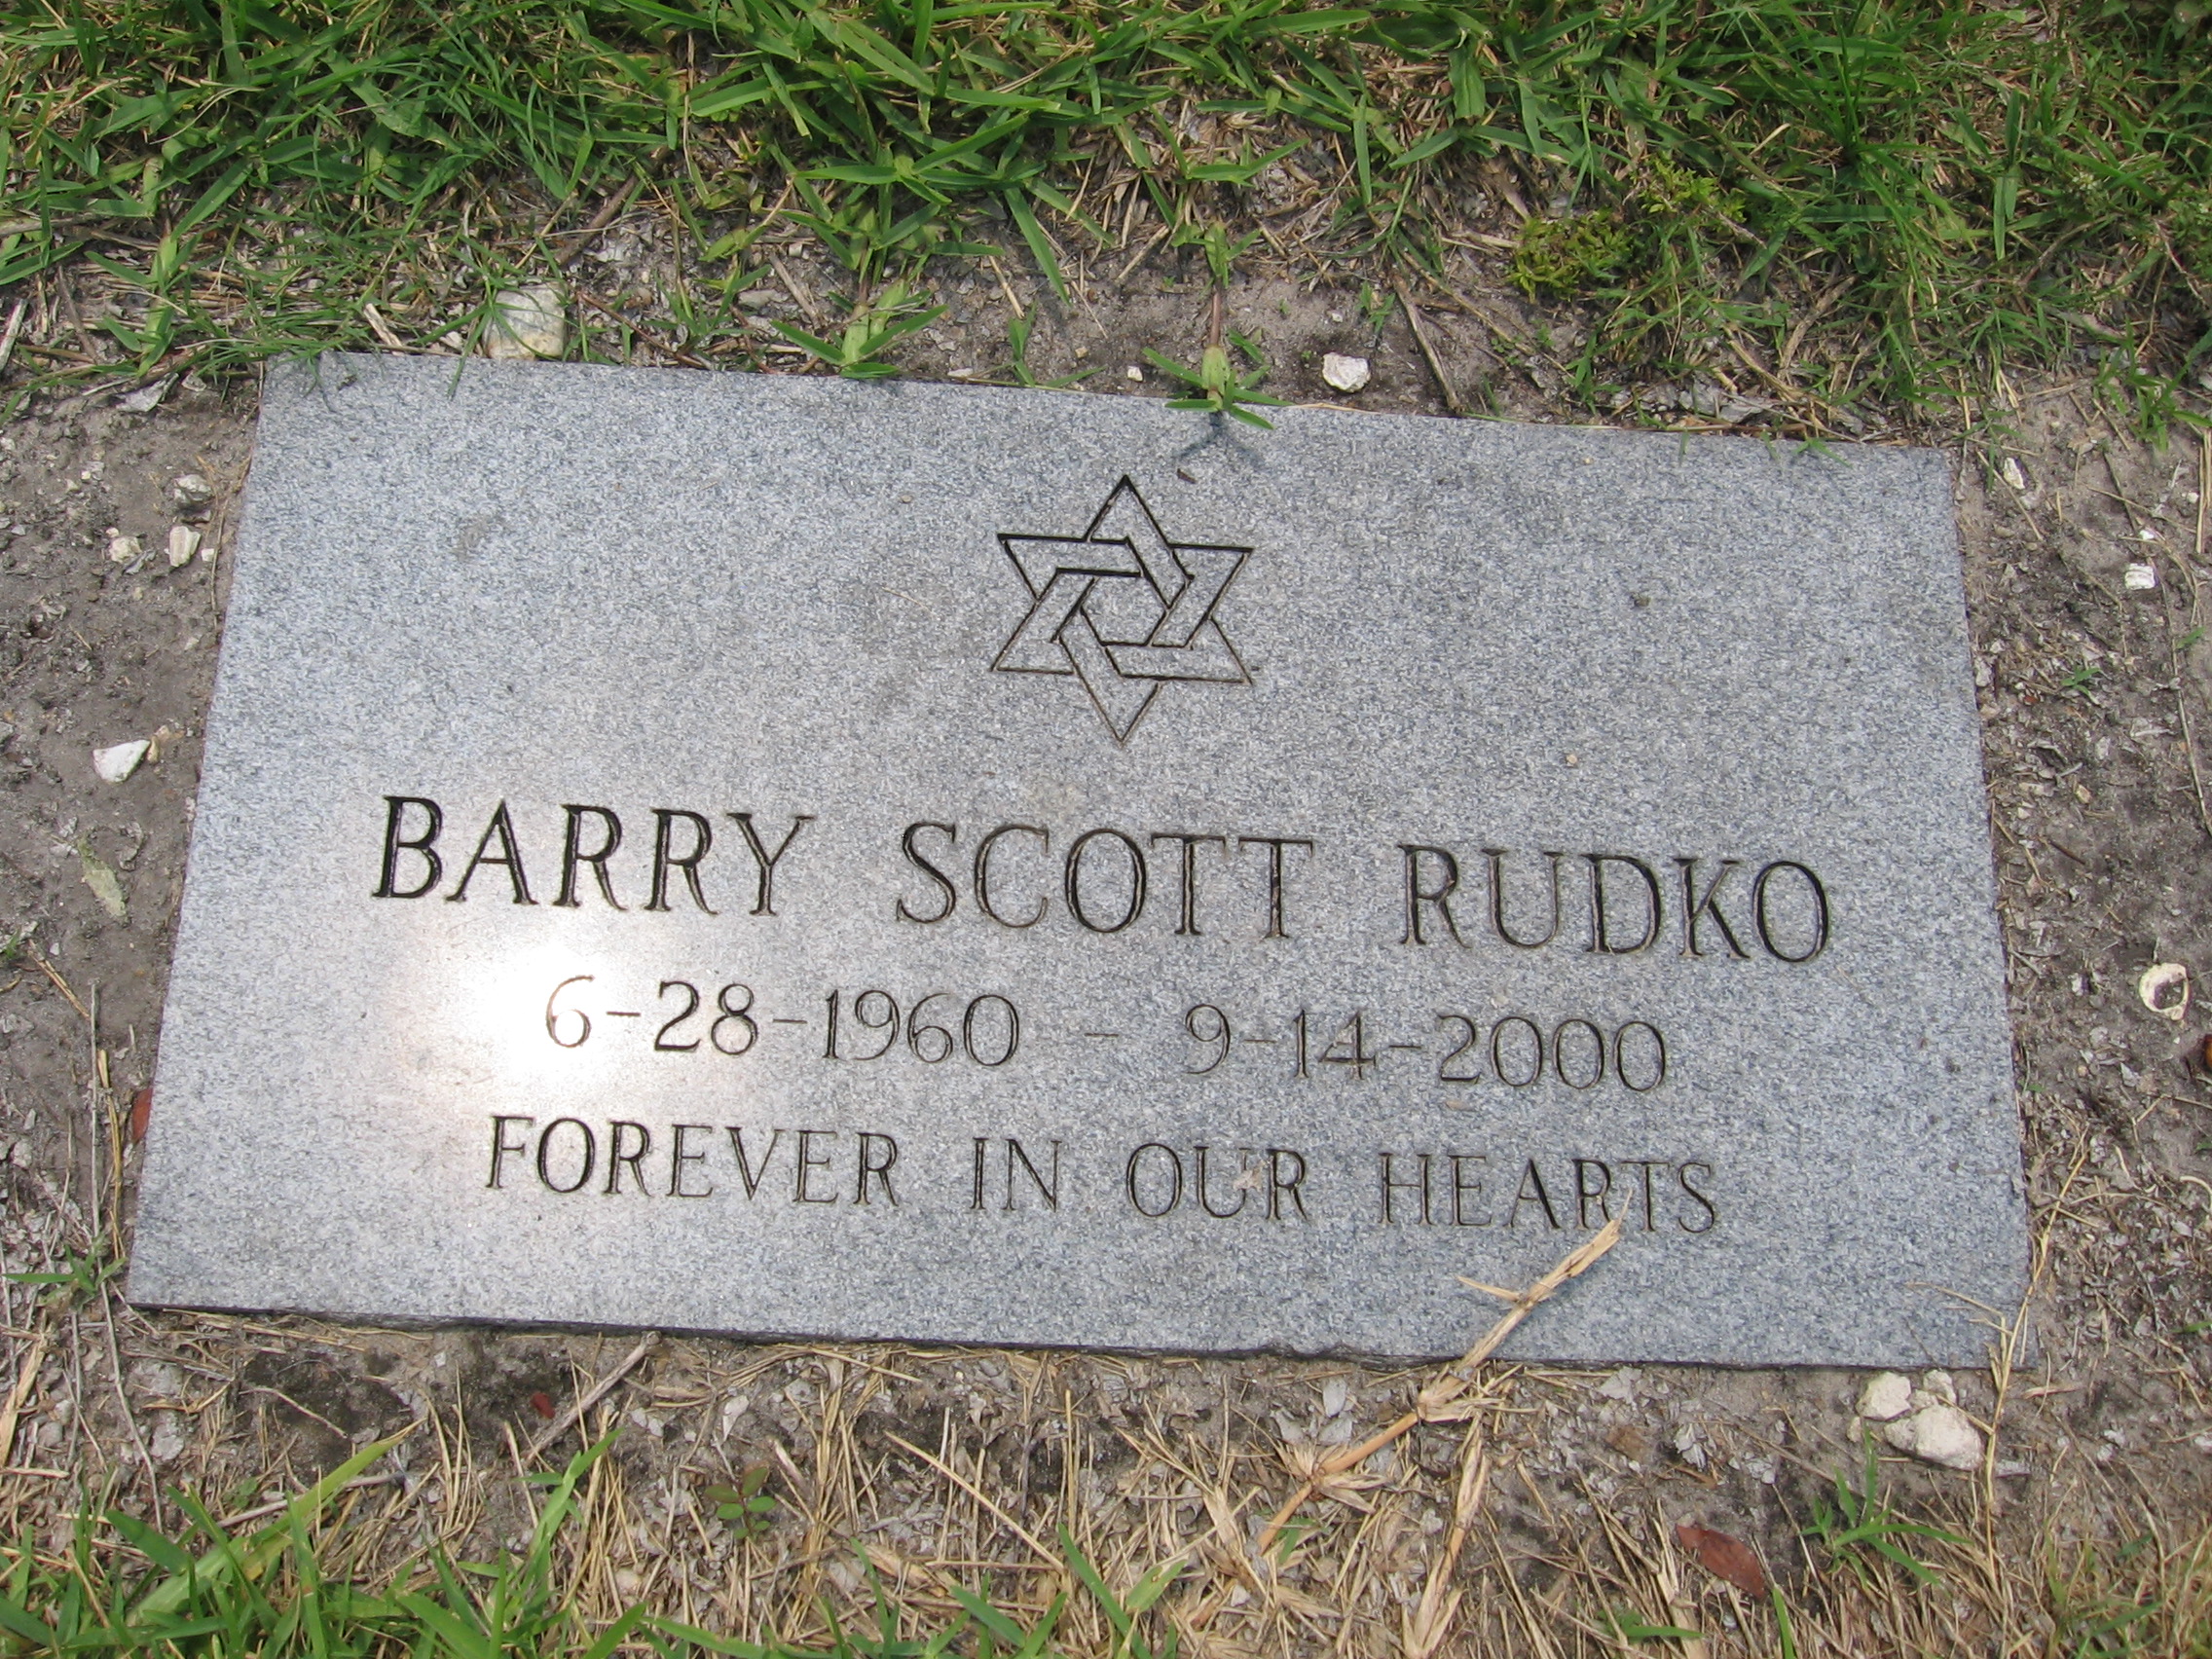 Barry Scott Rudko